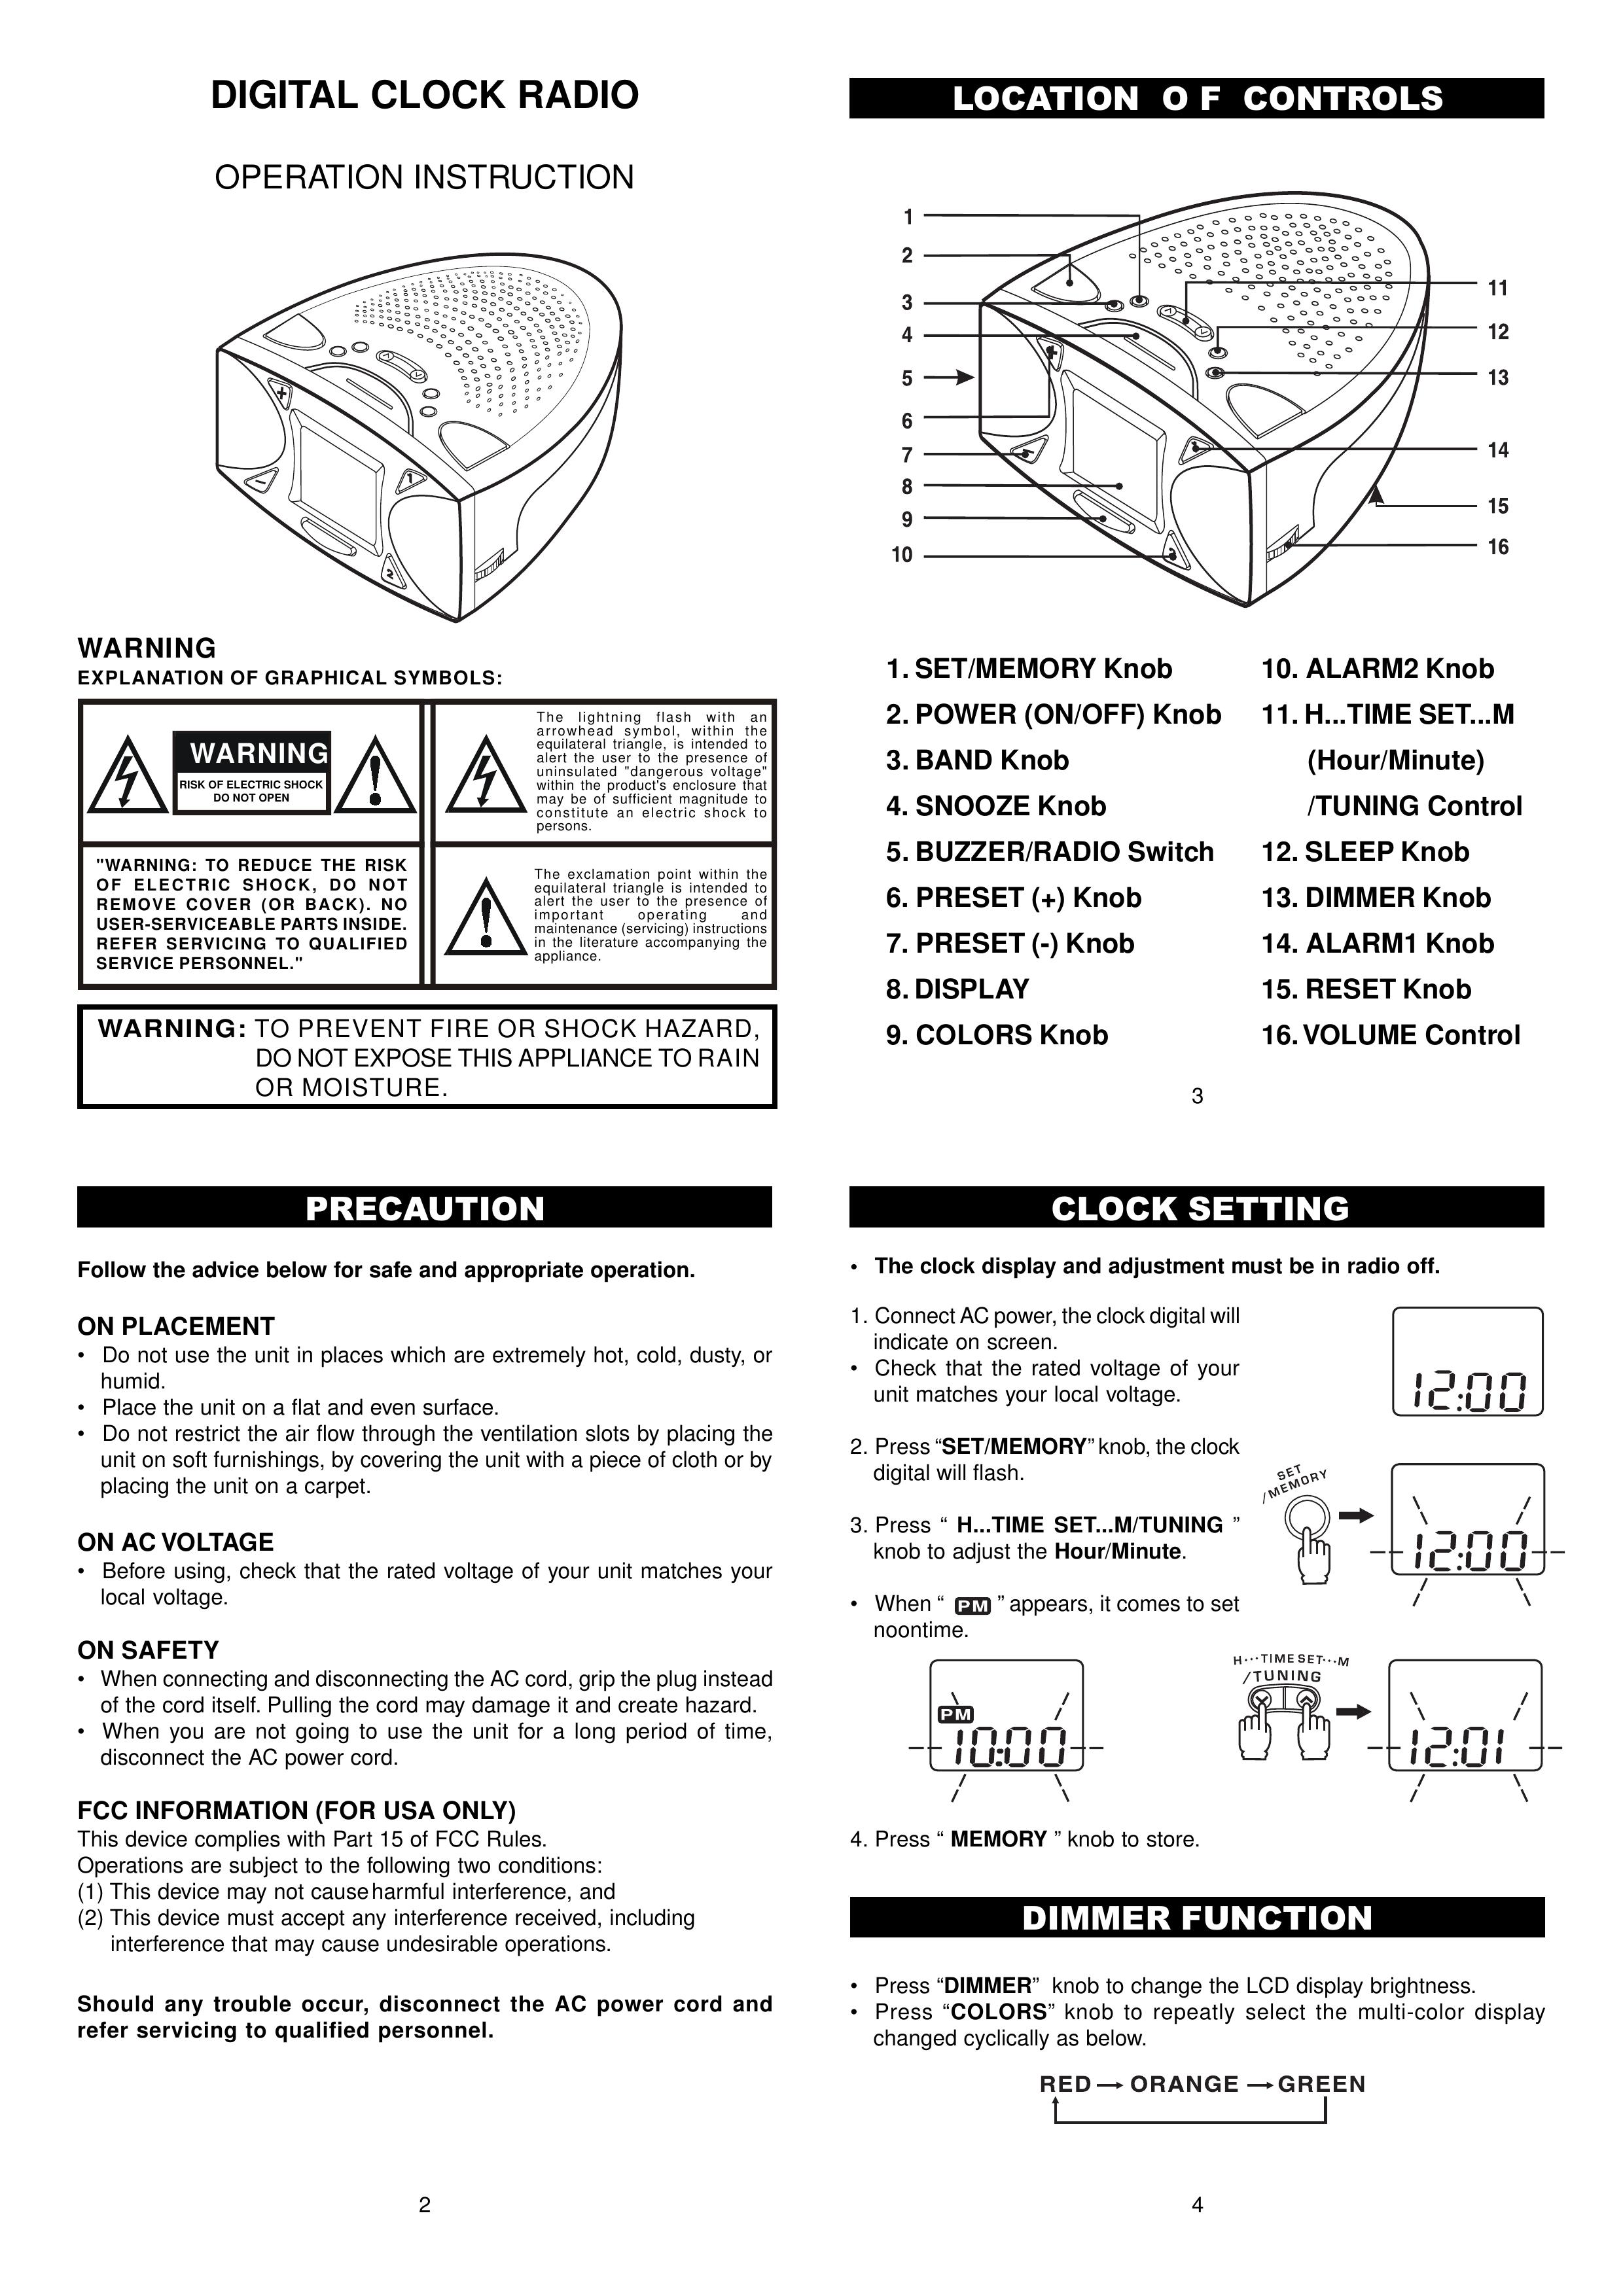 Audiovox CR-308 Clock Radio User Manual